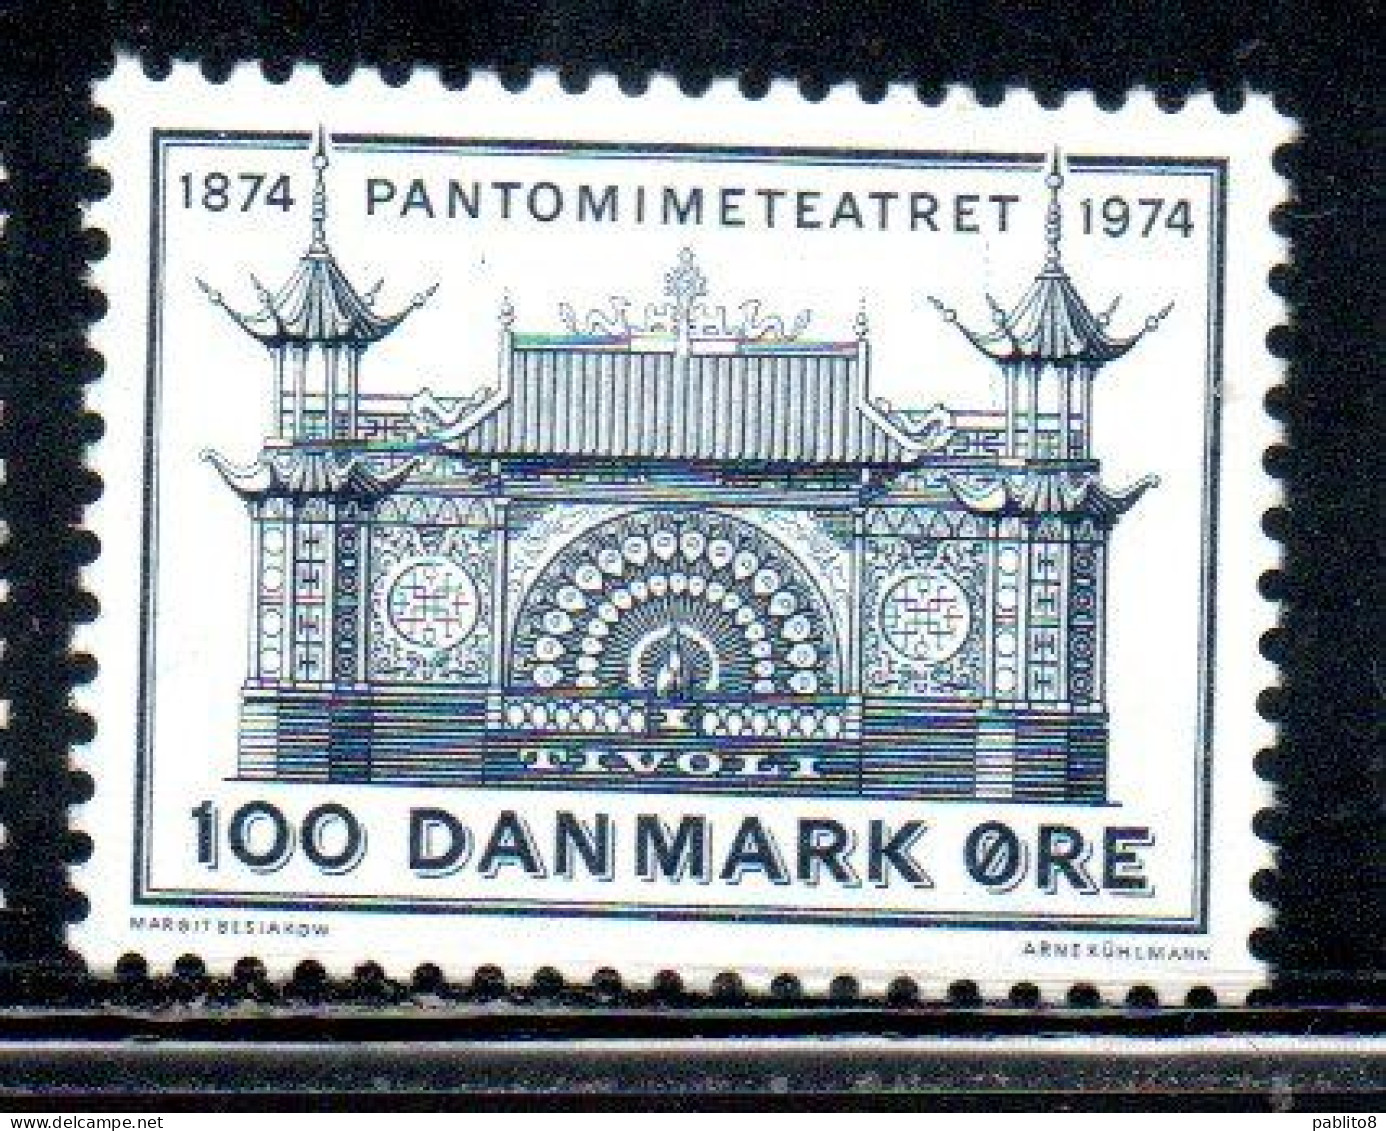 DANEMARK DANMARK DENMARK DANIMARCA 1974 PANTOMIME TEATHER TIVOLI 100o MNH - Unused Stamps